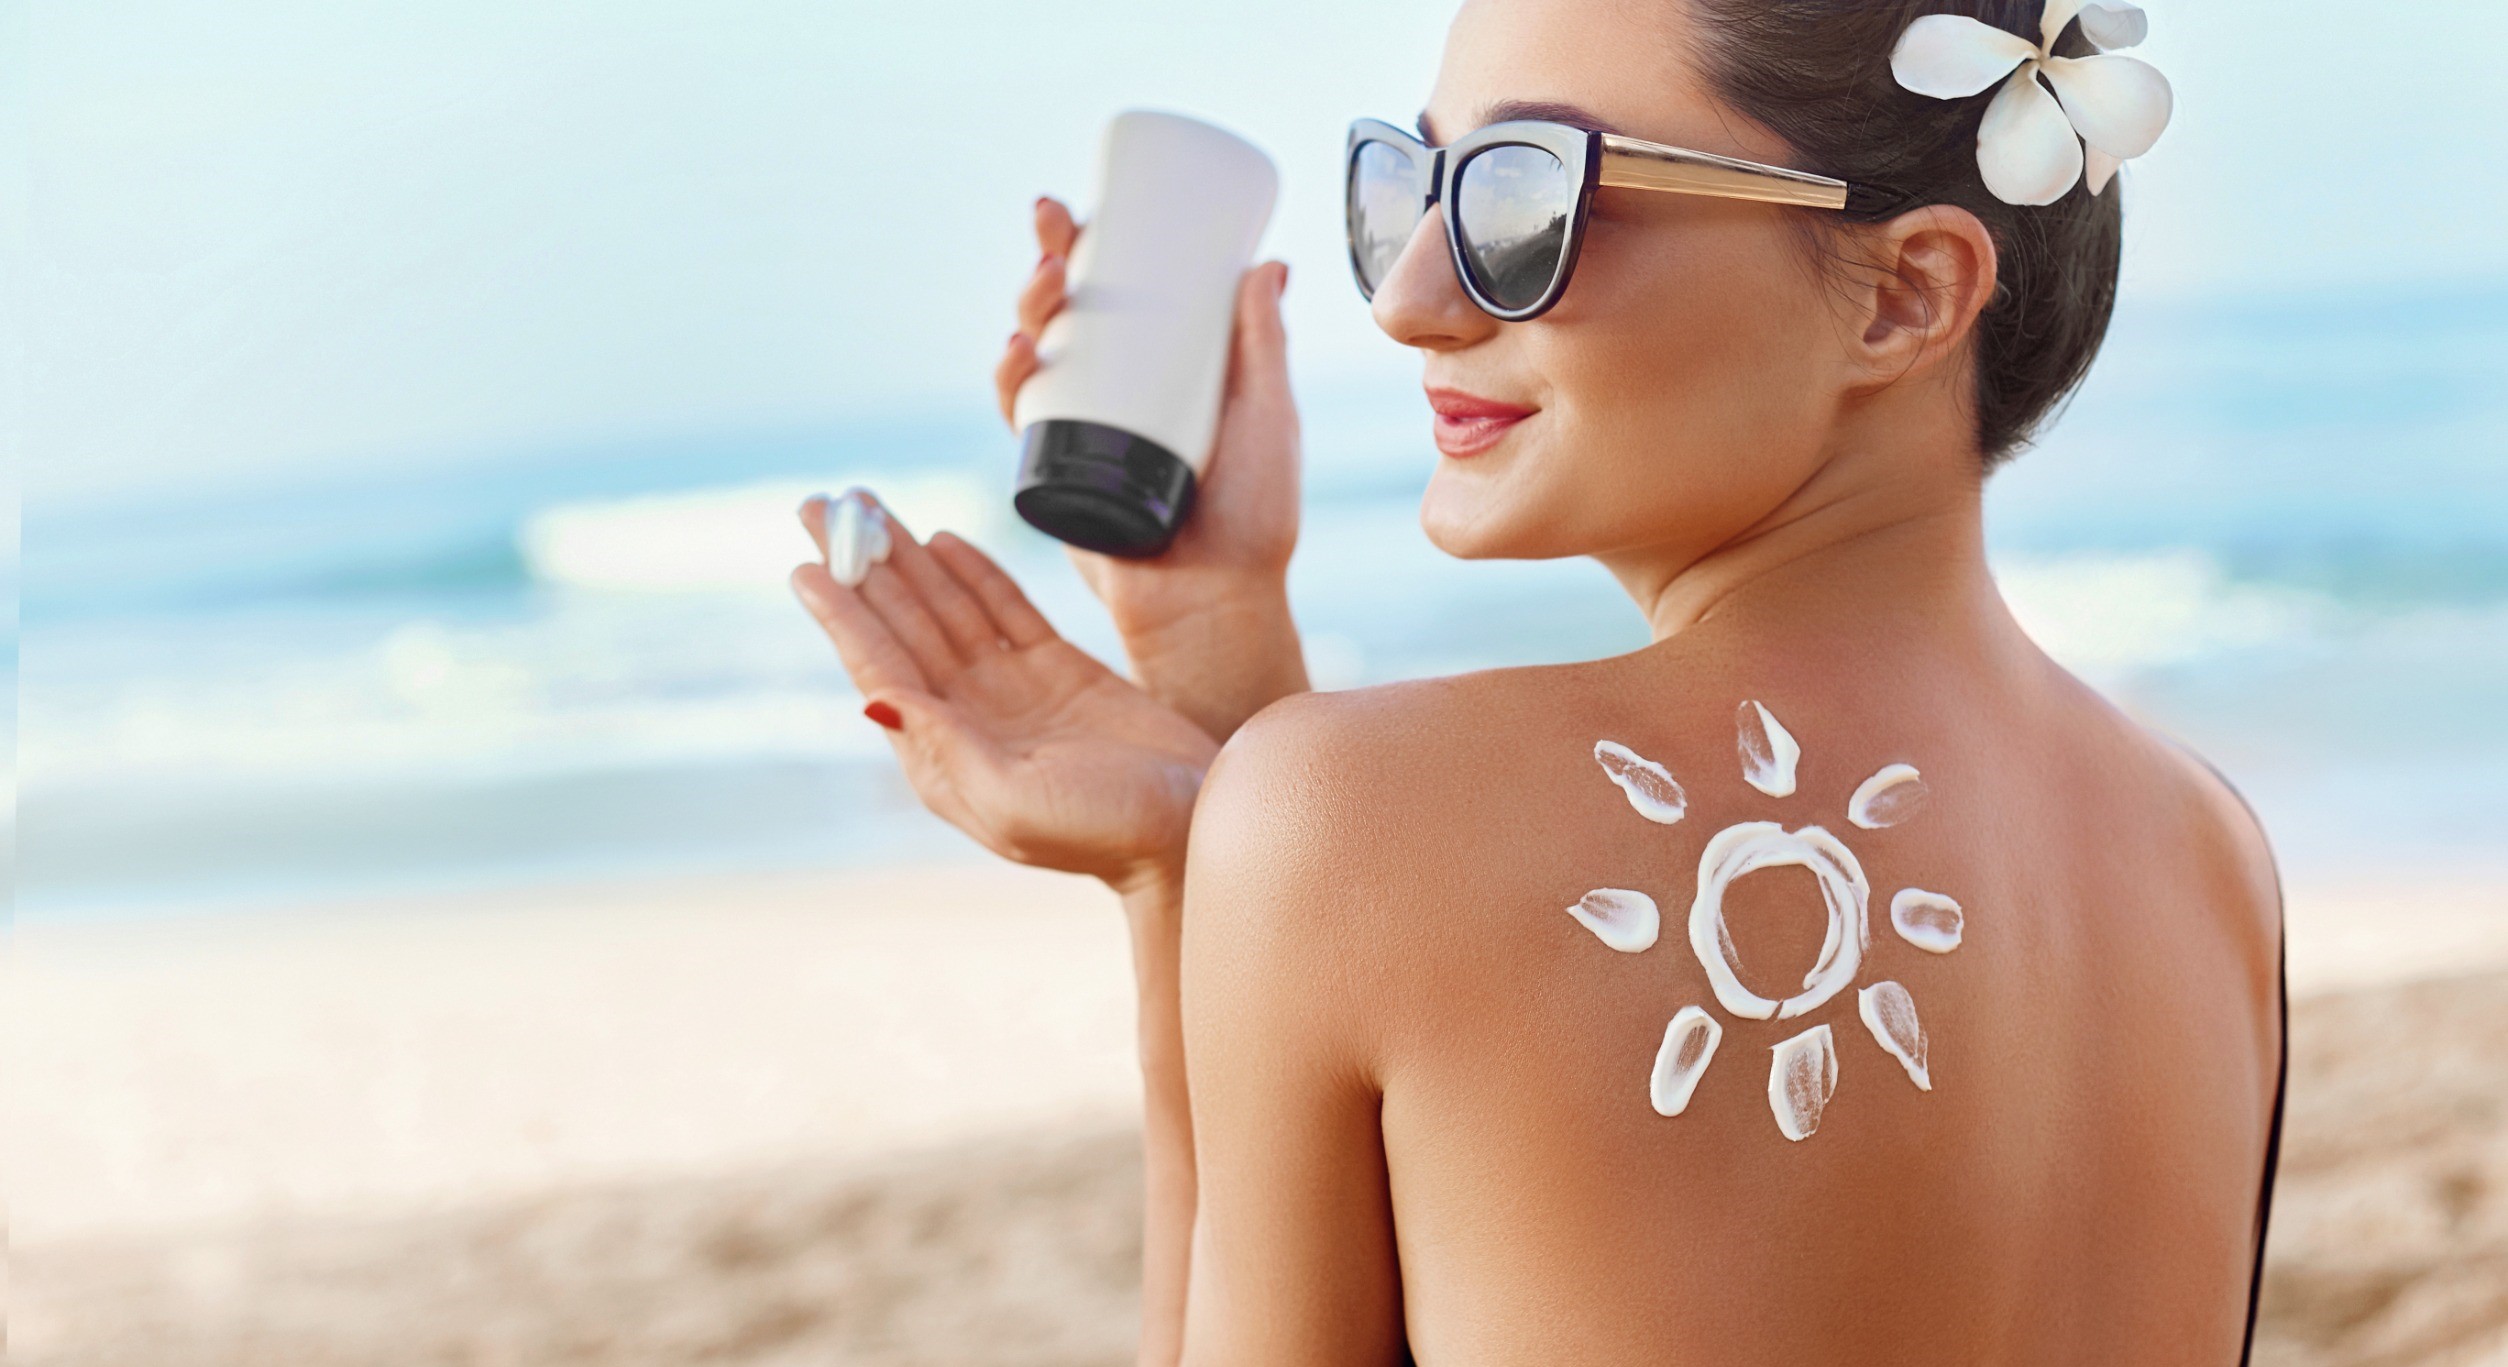 Sunscreen and Medical-Grade Skincare